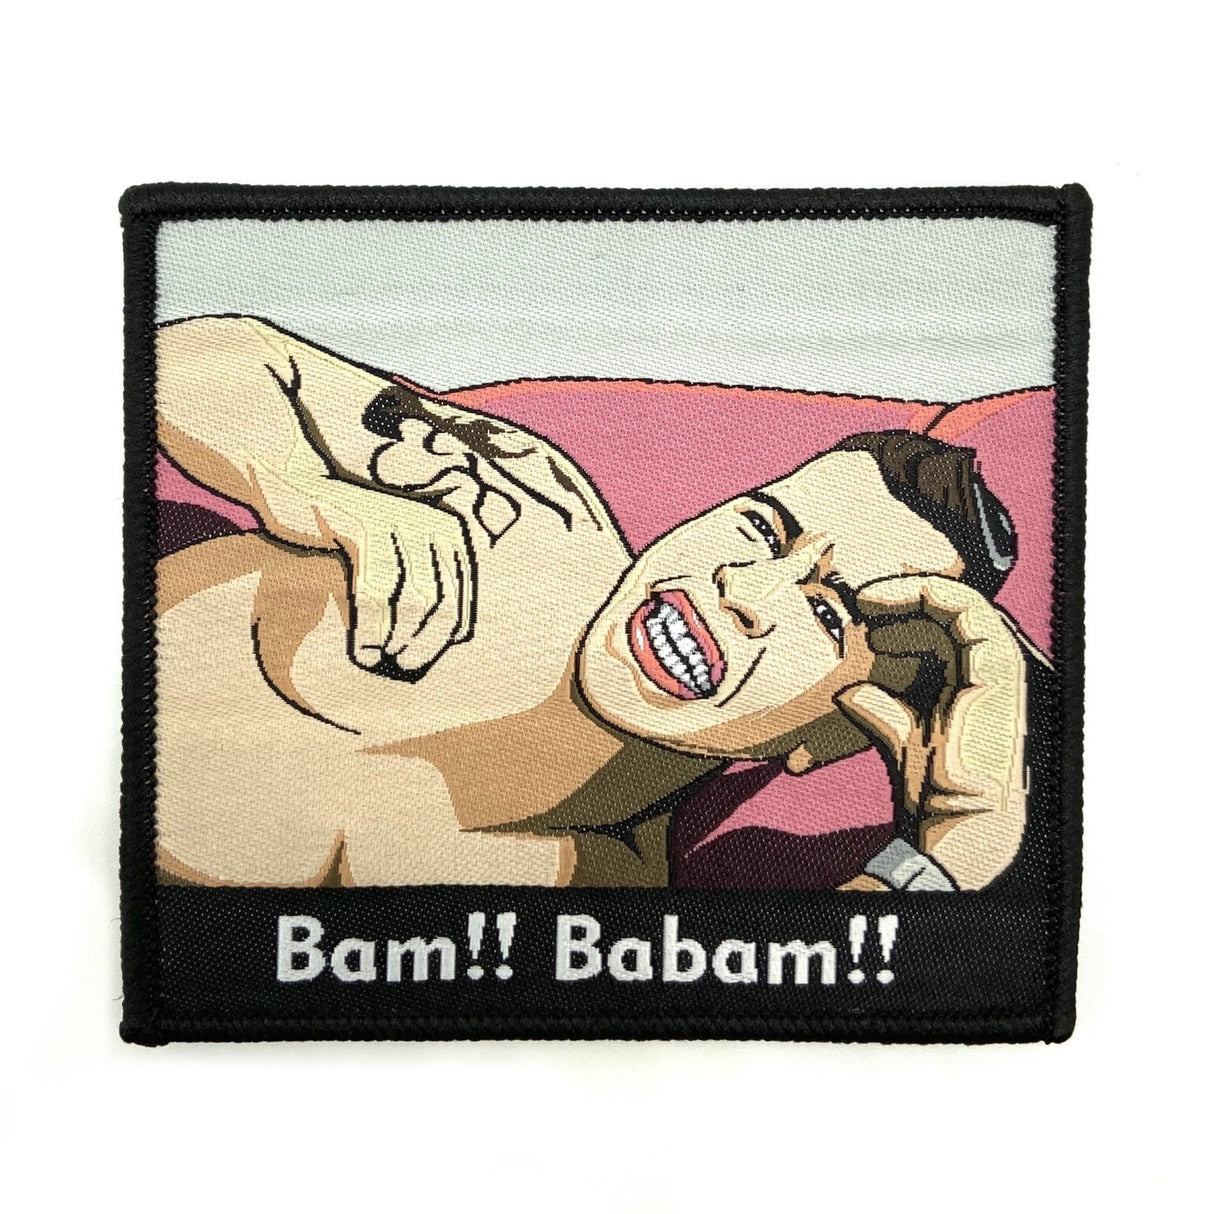 Bam Babam Textil Patch